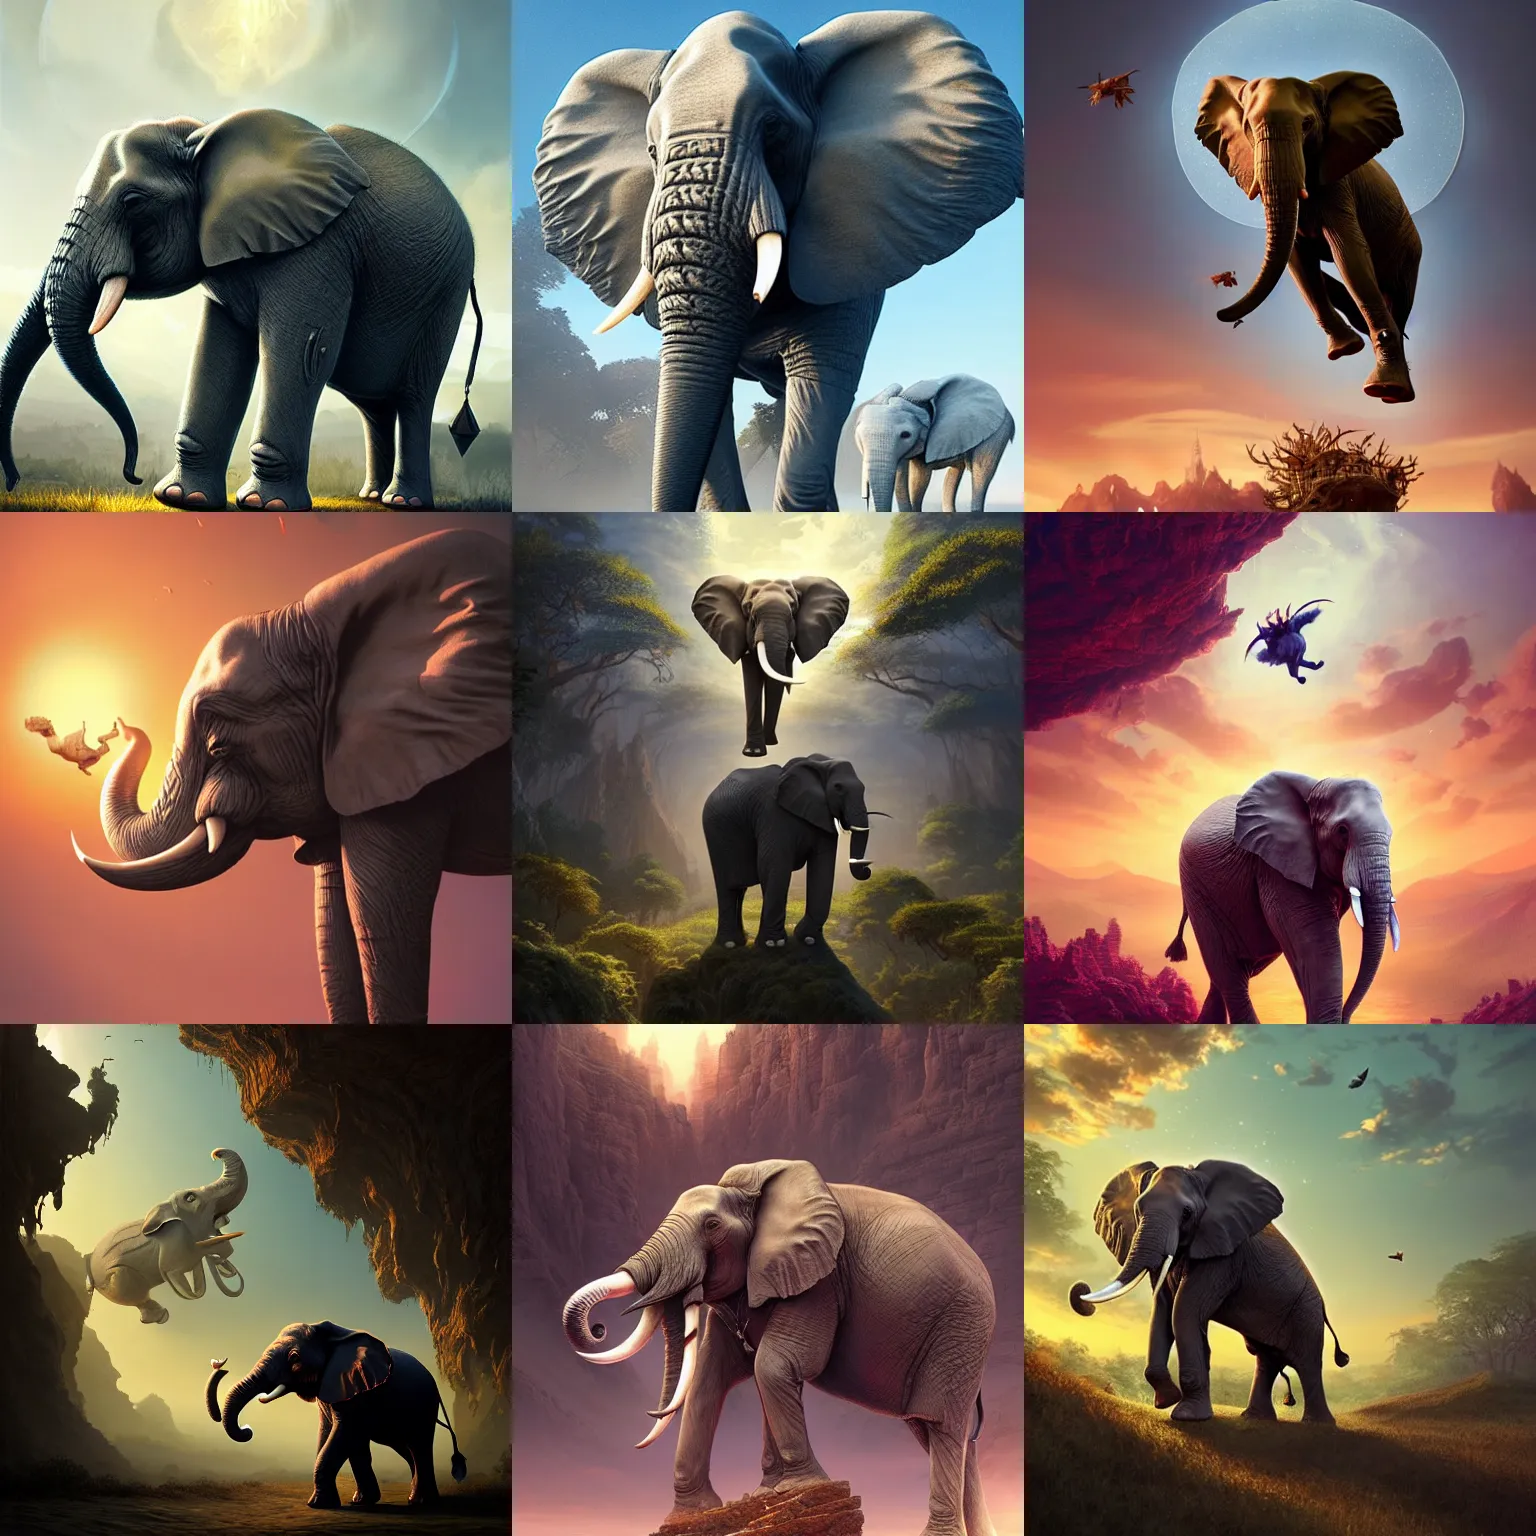 Prompt: elephant flying using his big ears, fantasy, intricate, epic lighting, cinematic composition, hyper realistic, 8 k resolution, unreal engine 5, by artgerm, tooth wu, dan mumford, beeple, rossdraws, james jean, marc simonetti, artstation